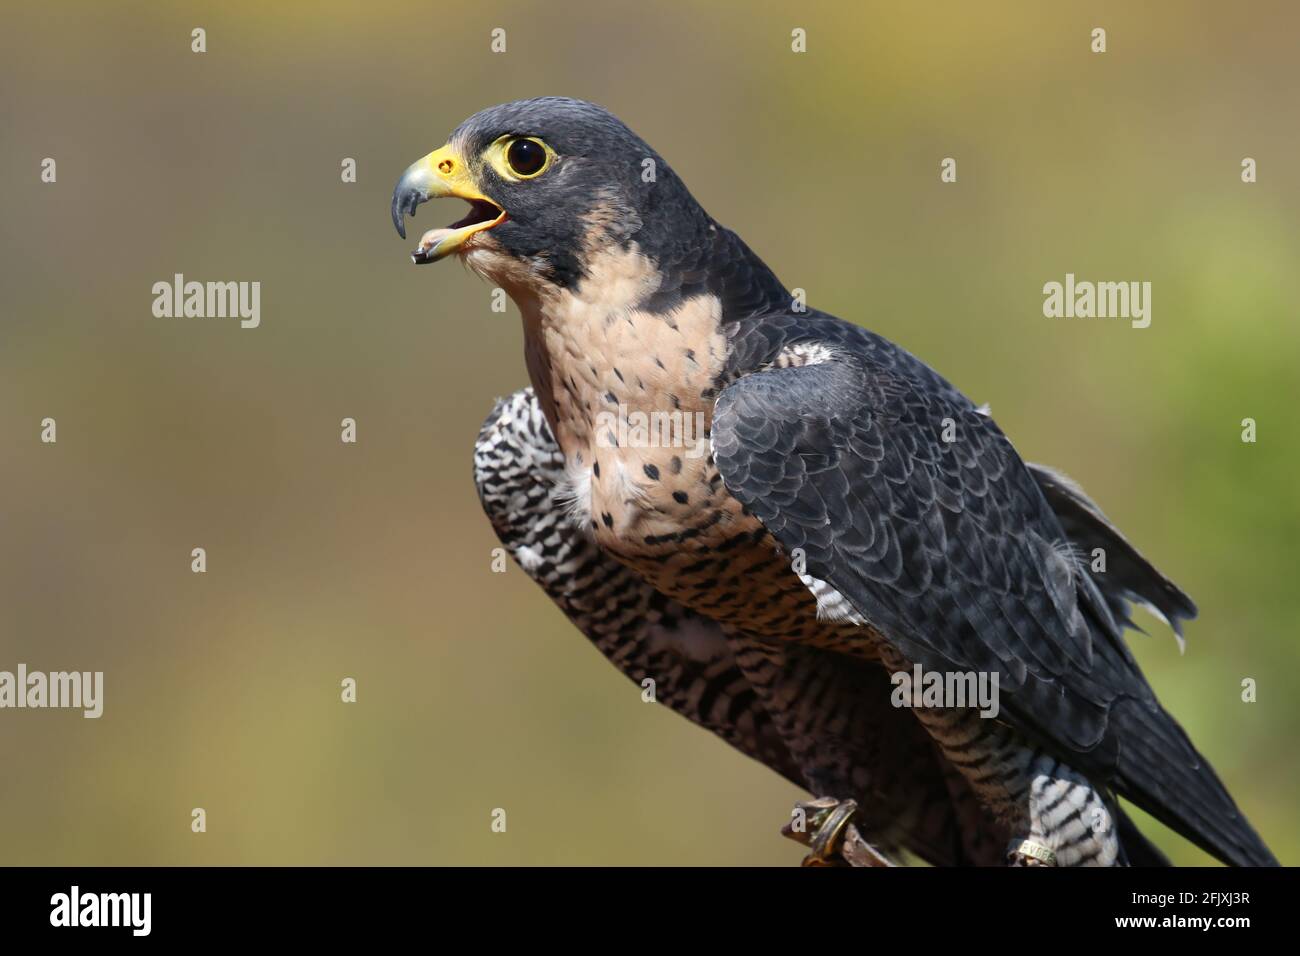 Peregrine falcon fastest bird perched close-up Stock Photo